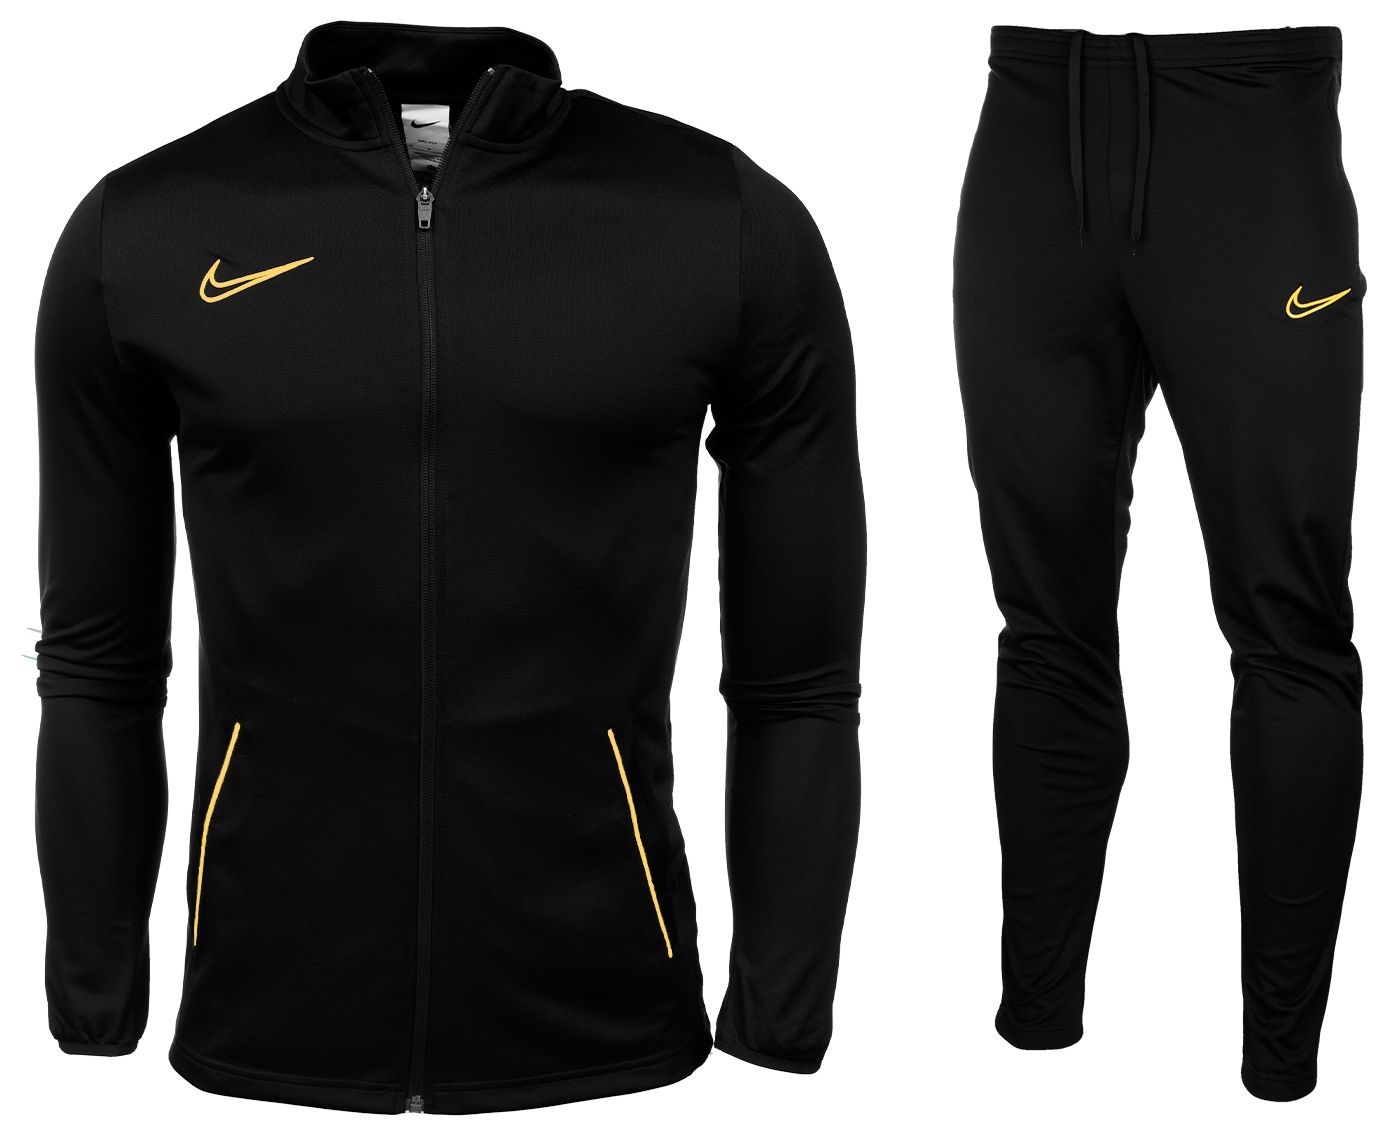 Nike Trening pentru bărbați Dry Academy21 Trk Suit CW6131 017